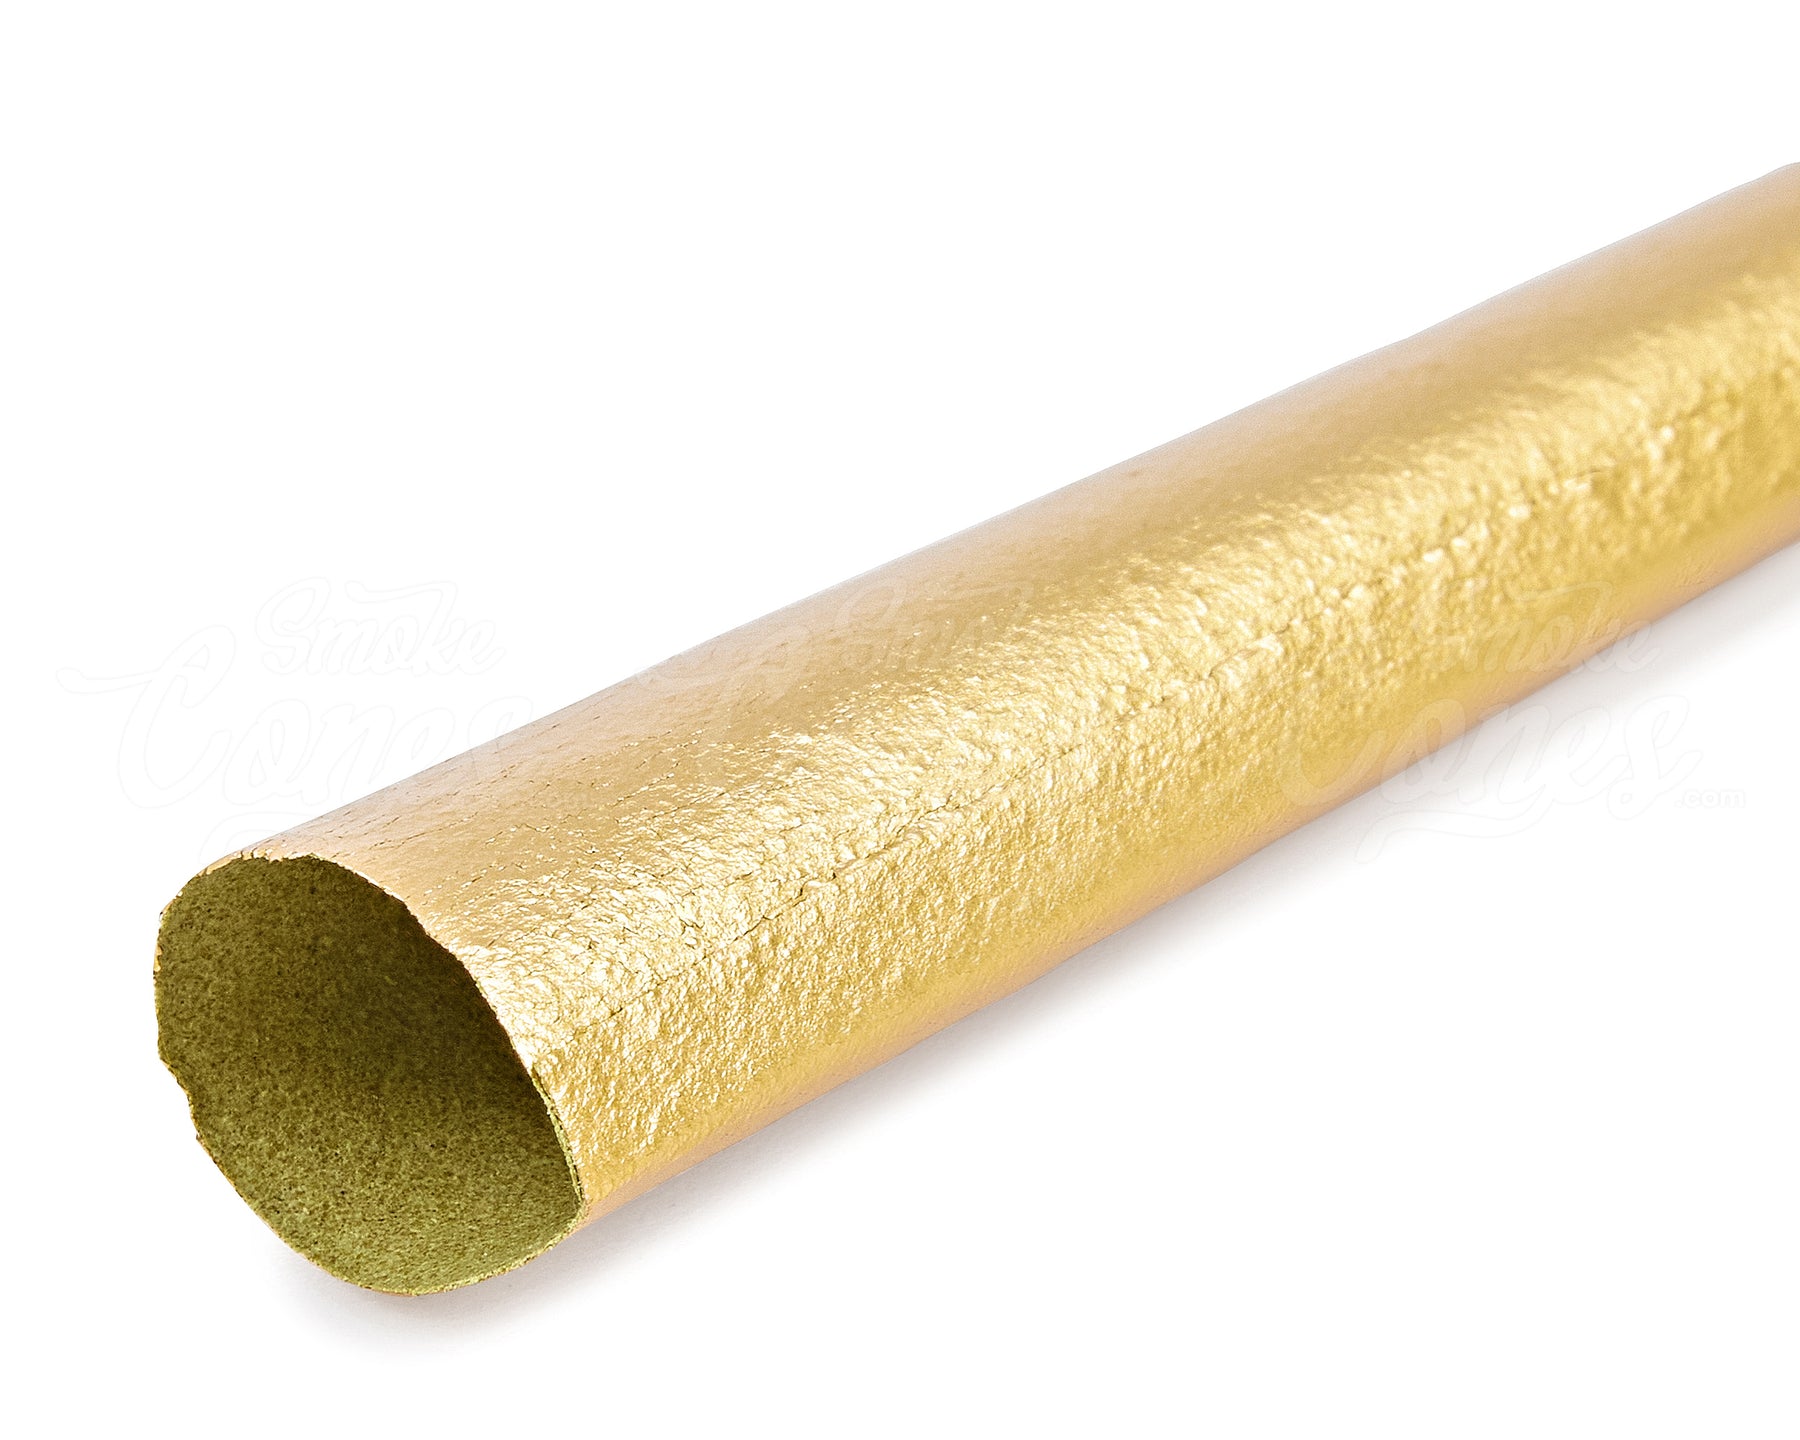 Kush 24K Gold Hemp King Size Pre Rolled Cones w/ Filter Tip 8/Box - 4